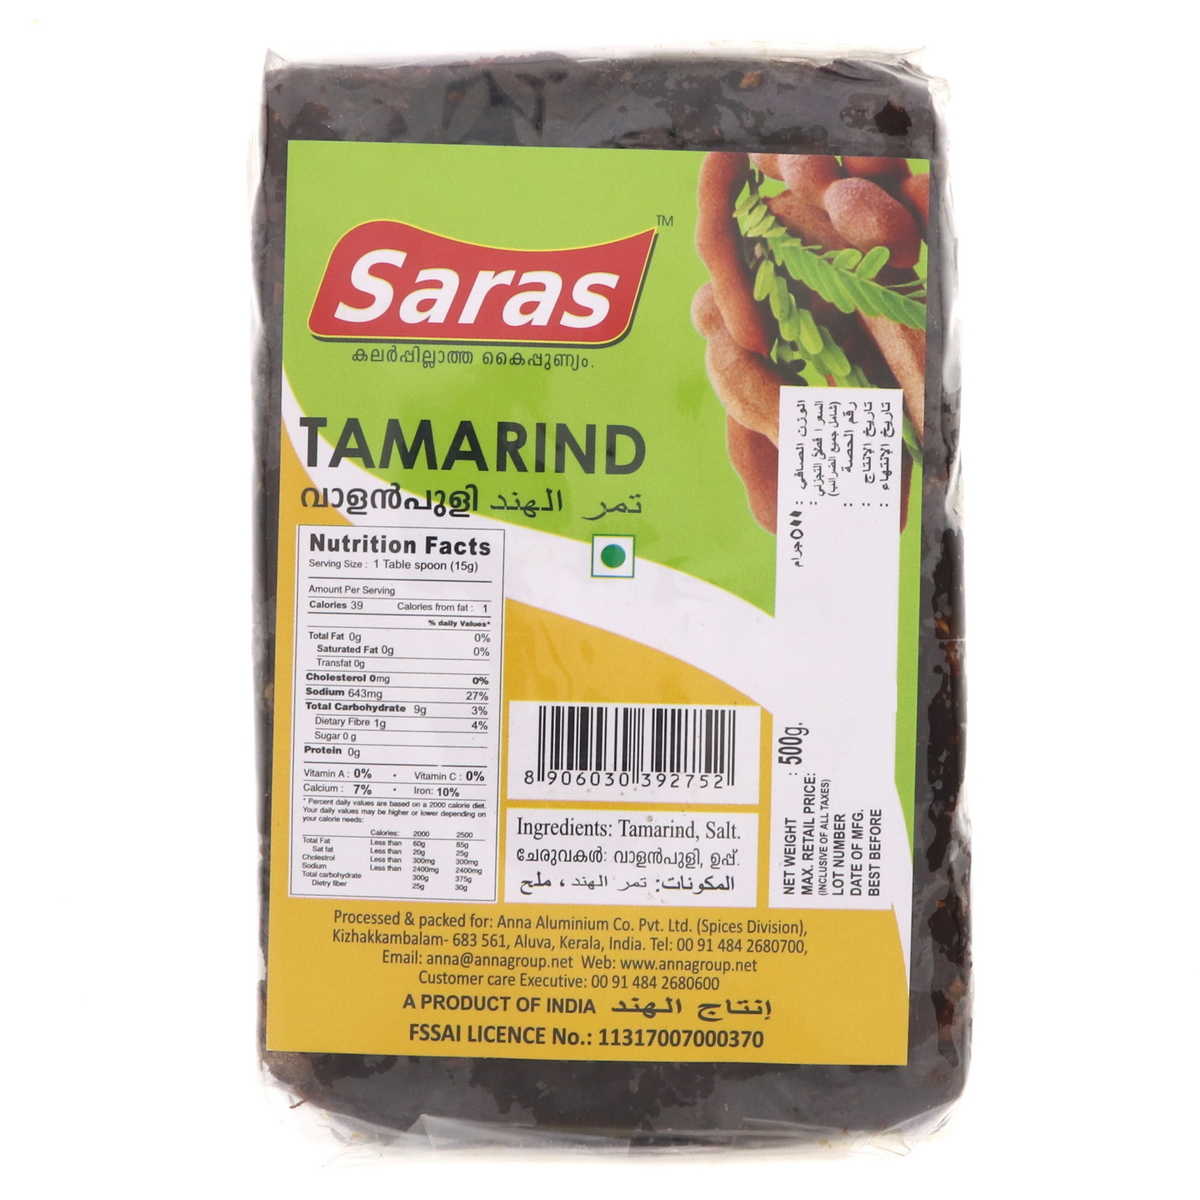 Saras Tamarind 500g